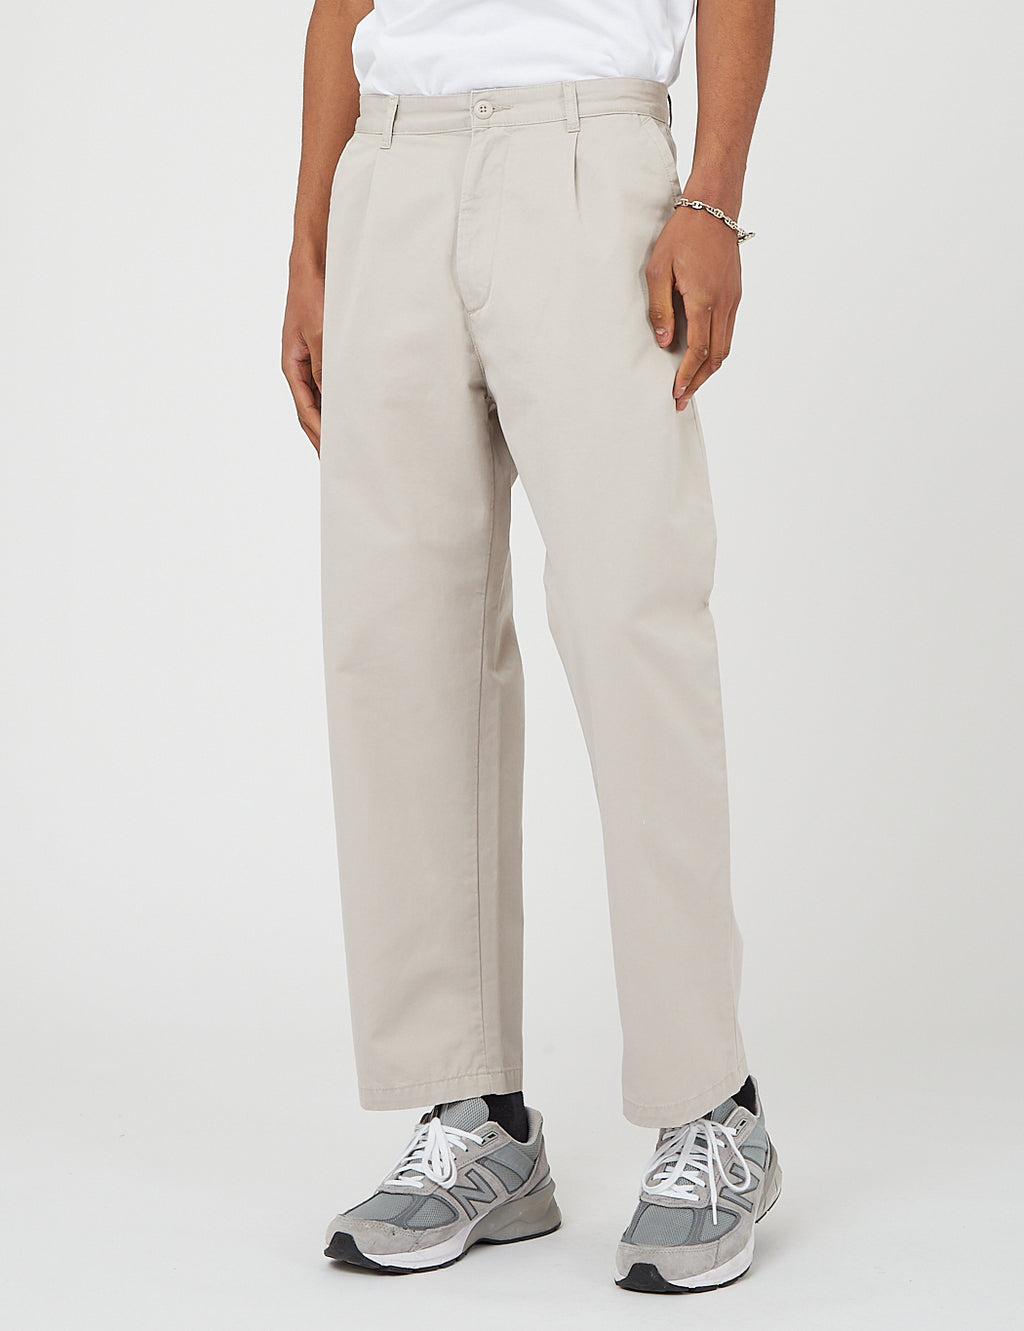 discount 99% WOMEN FASHION Trousers Print Navy Blue/White 34                  EU Zara Chino trouser 